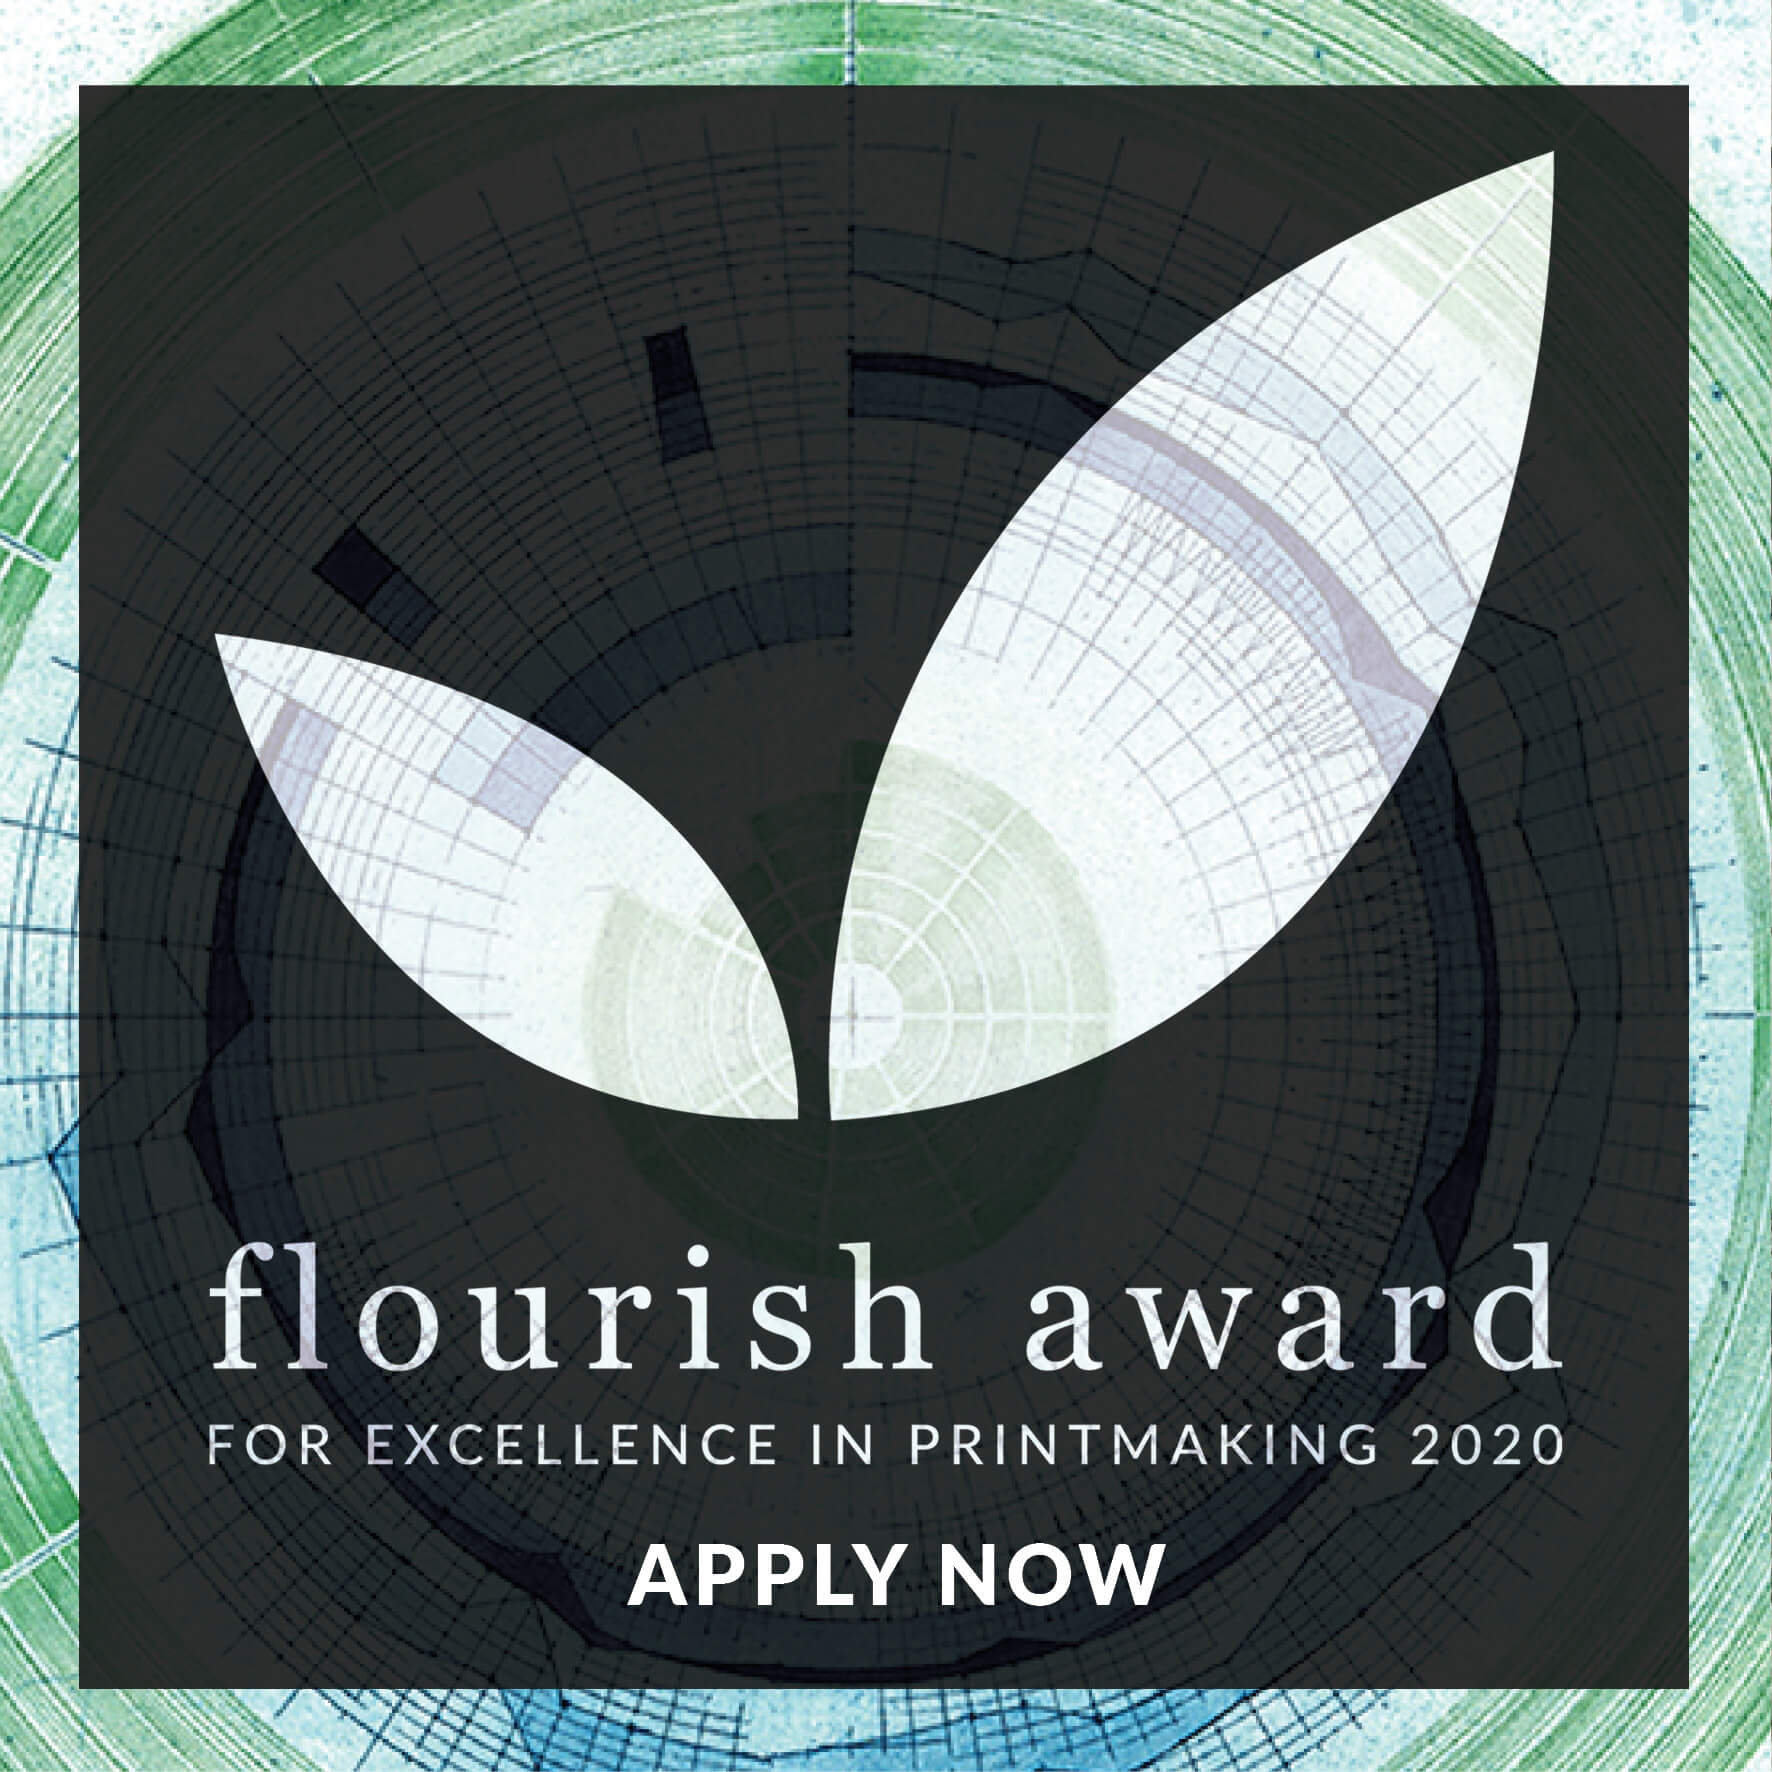 Flourish Award 2020